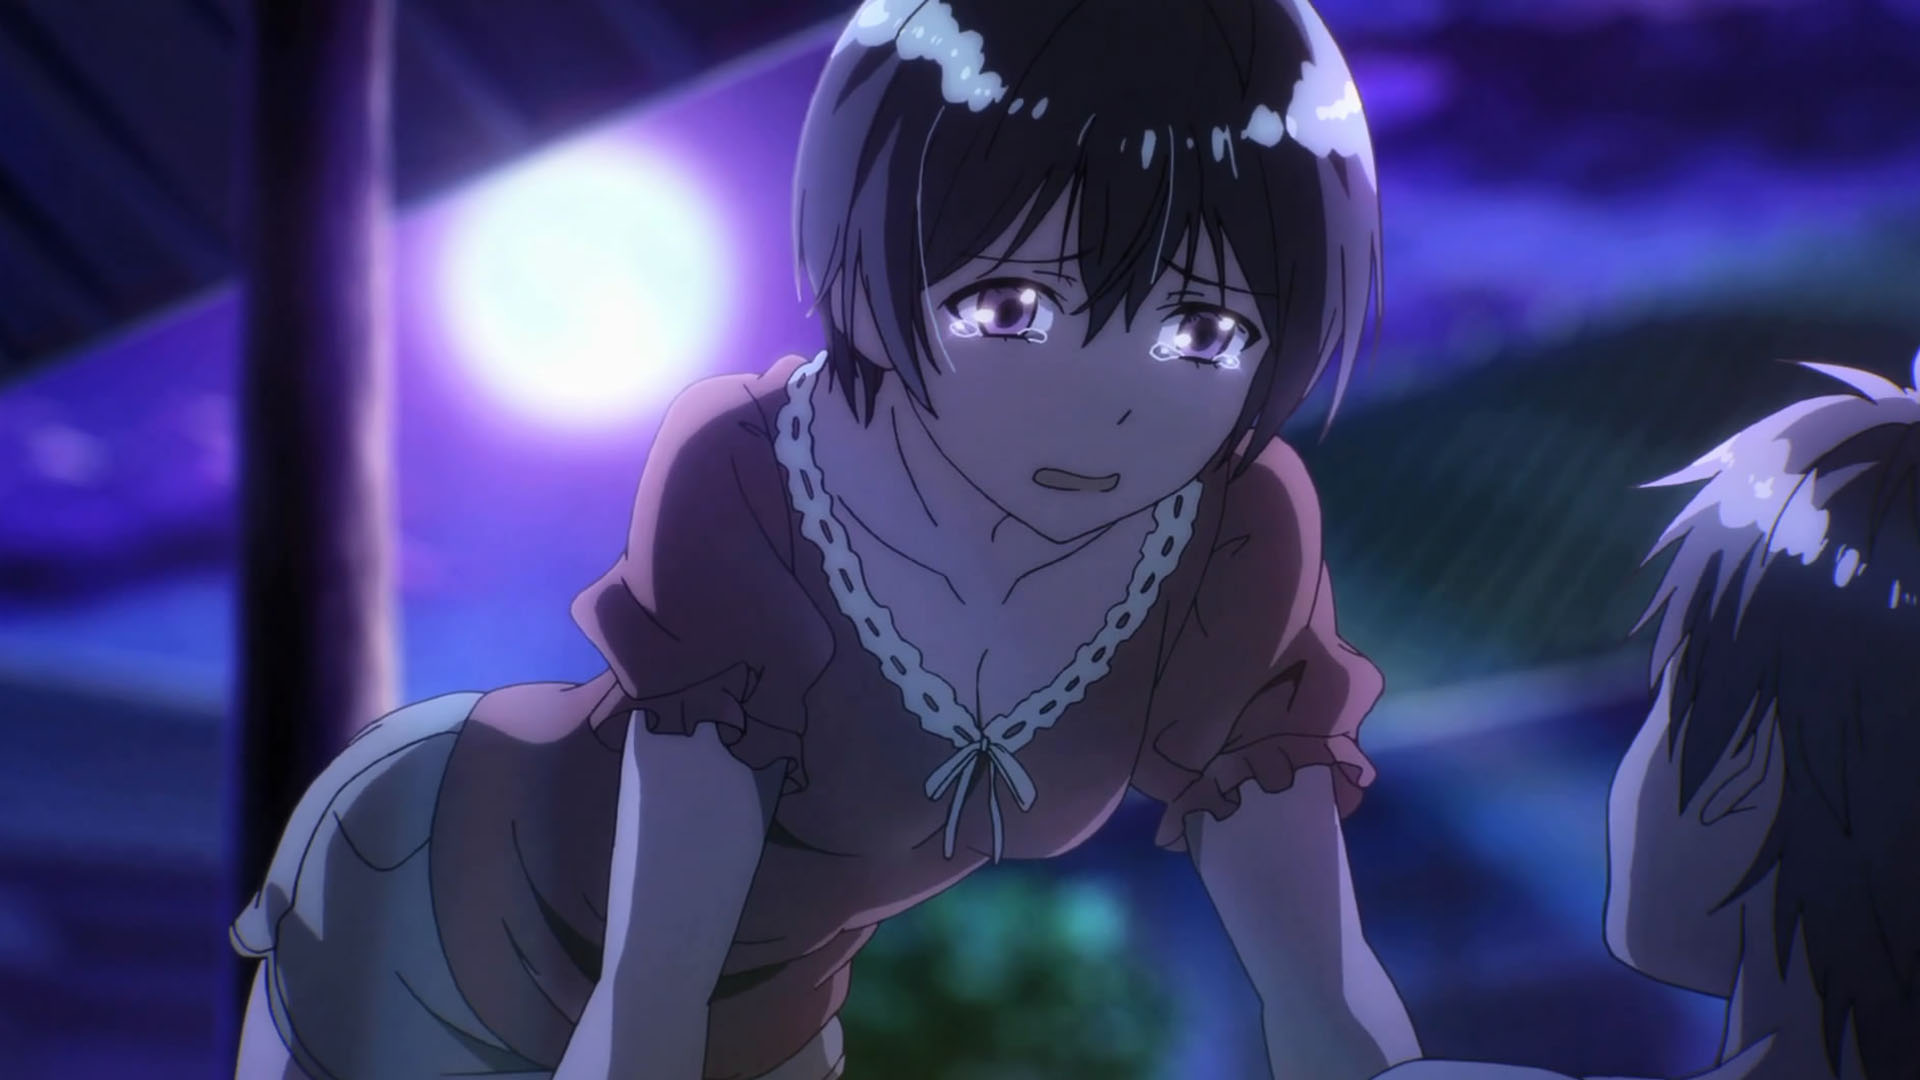 Bokura wa Minna Kawaisou Episode 10 Anime Review - Romance